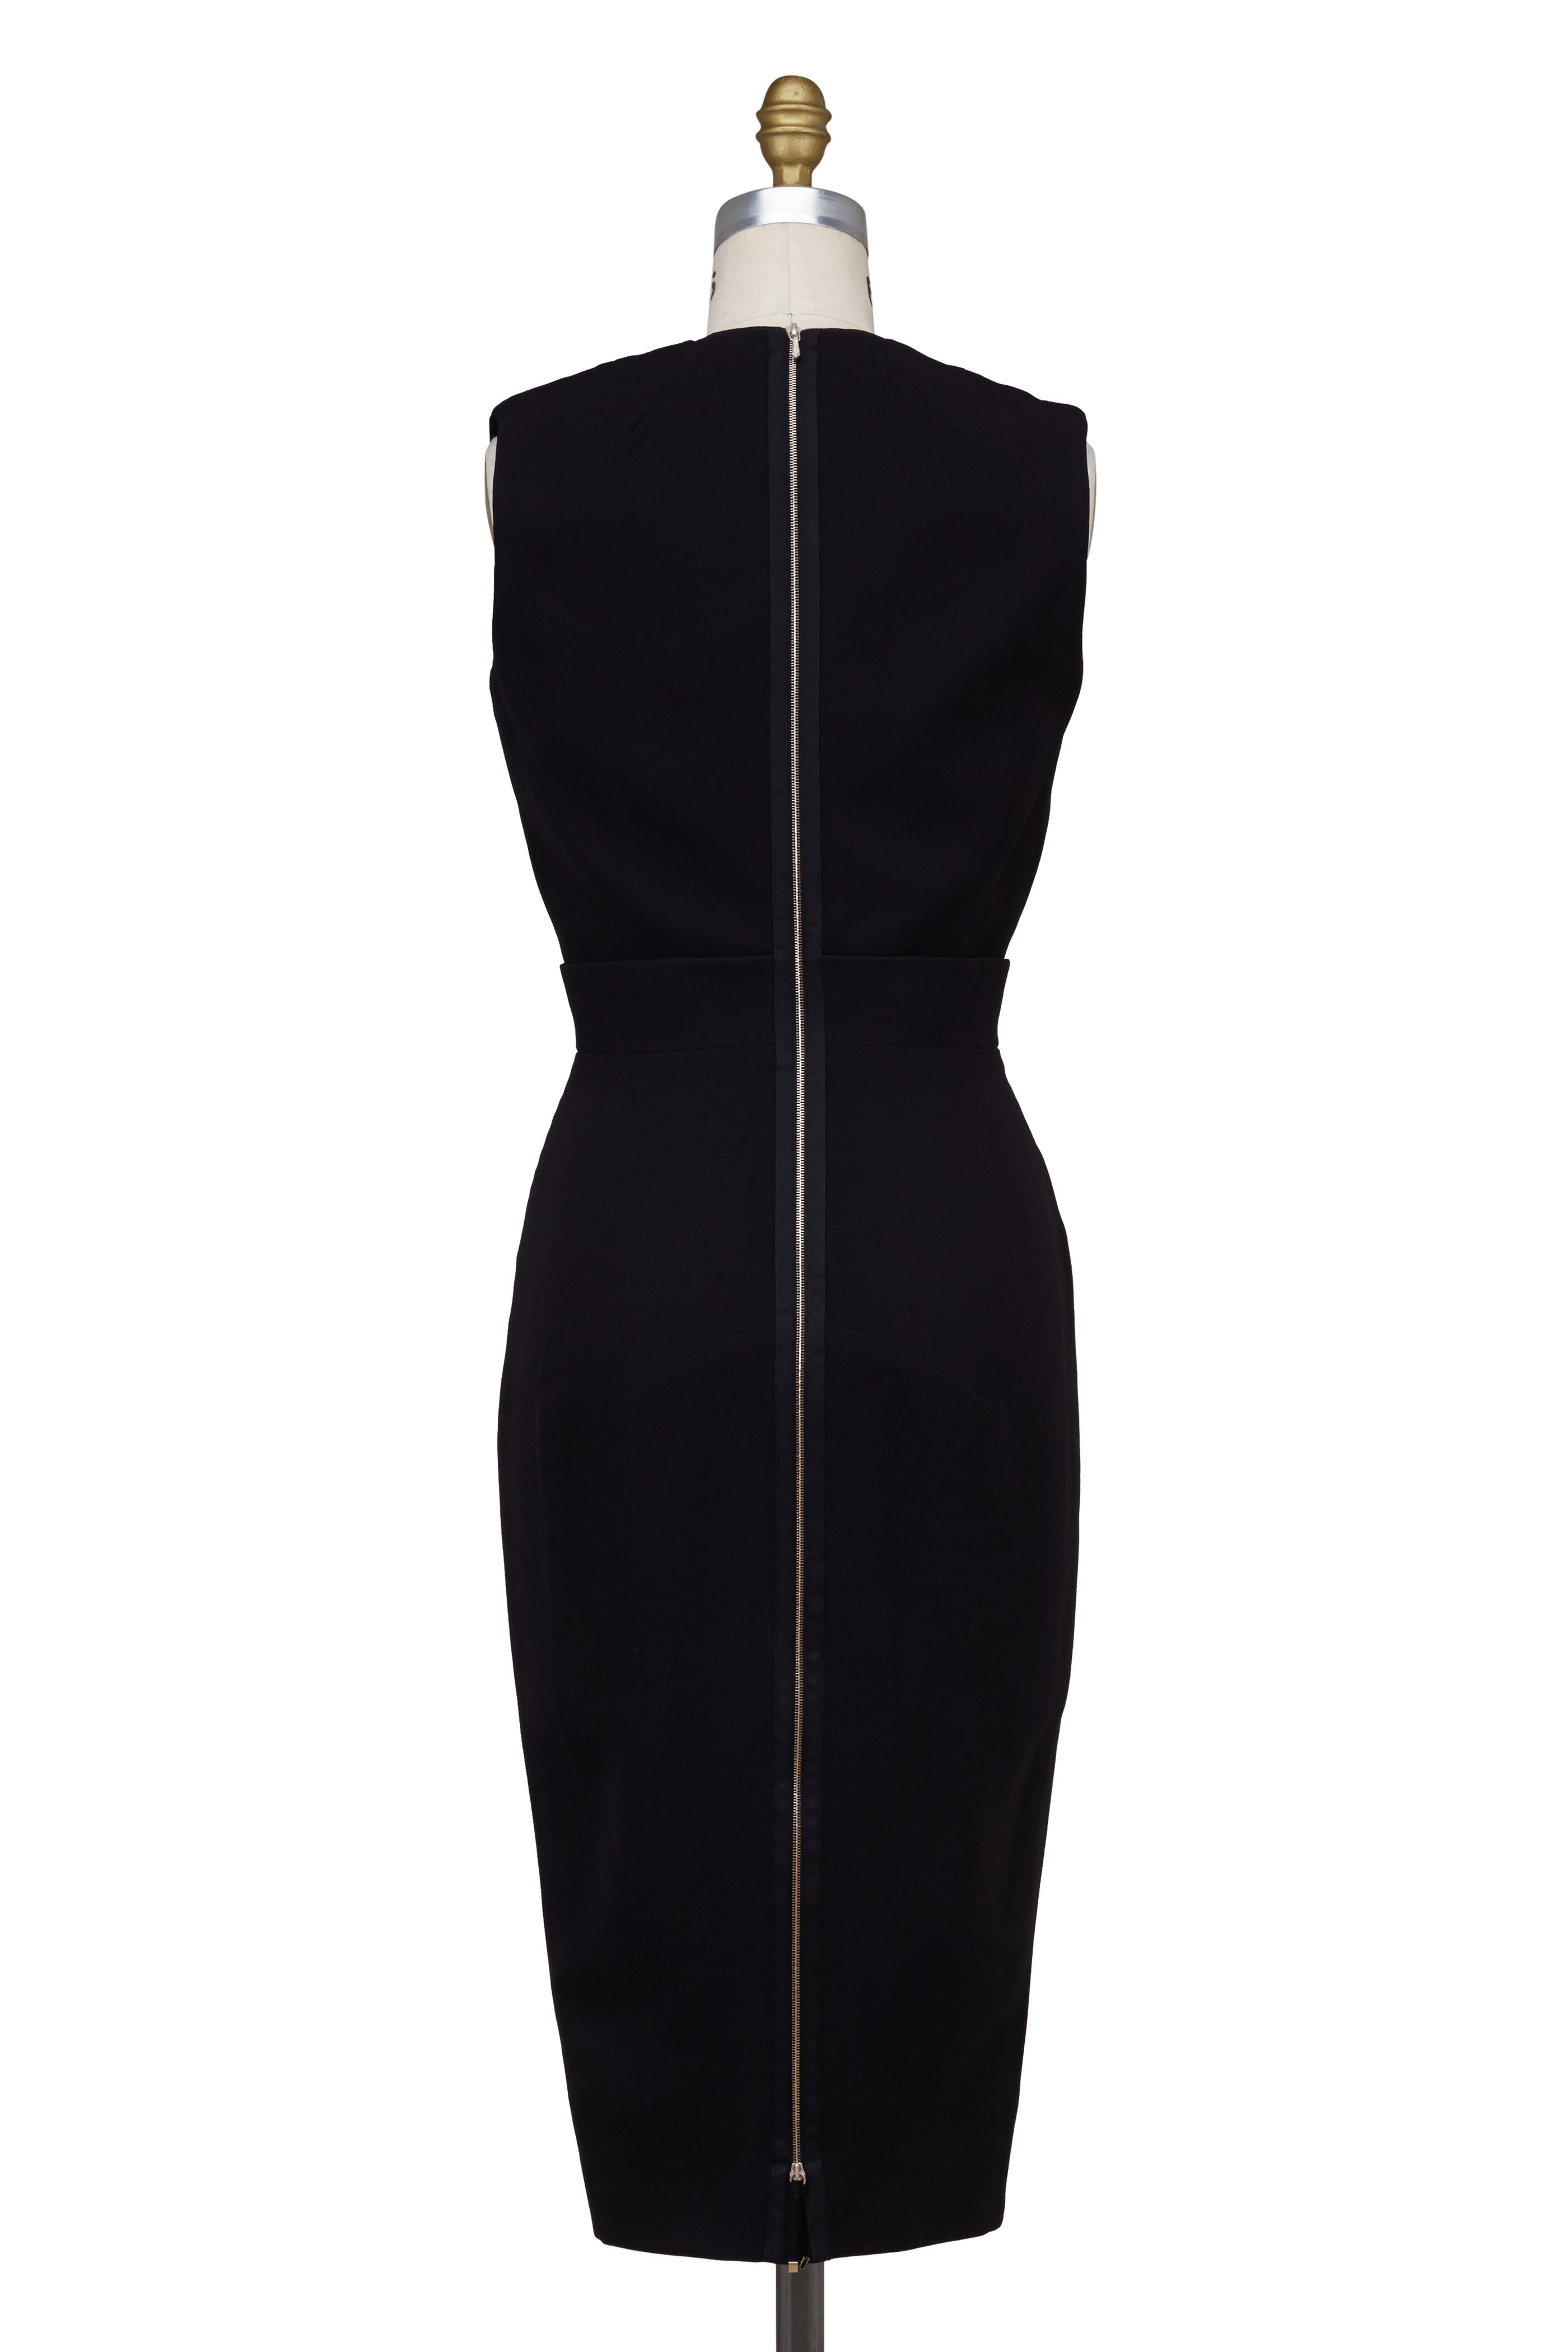 Victoria Beckham - Black Double Wool Crêpe Dress